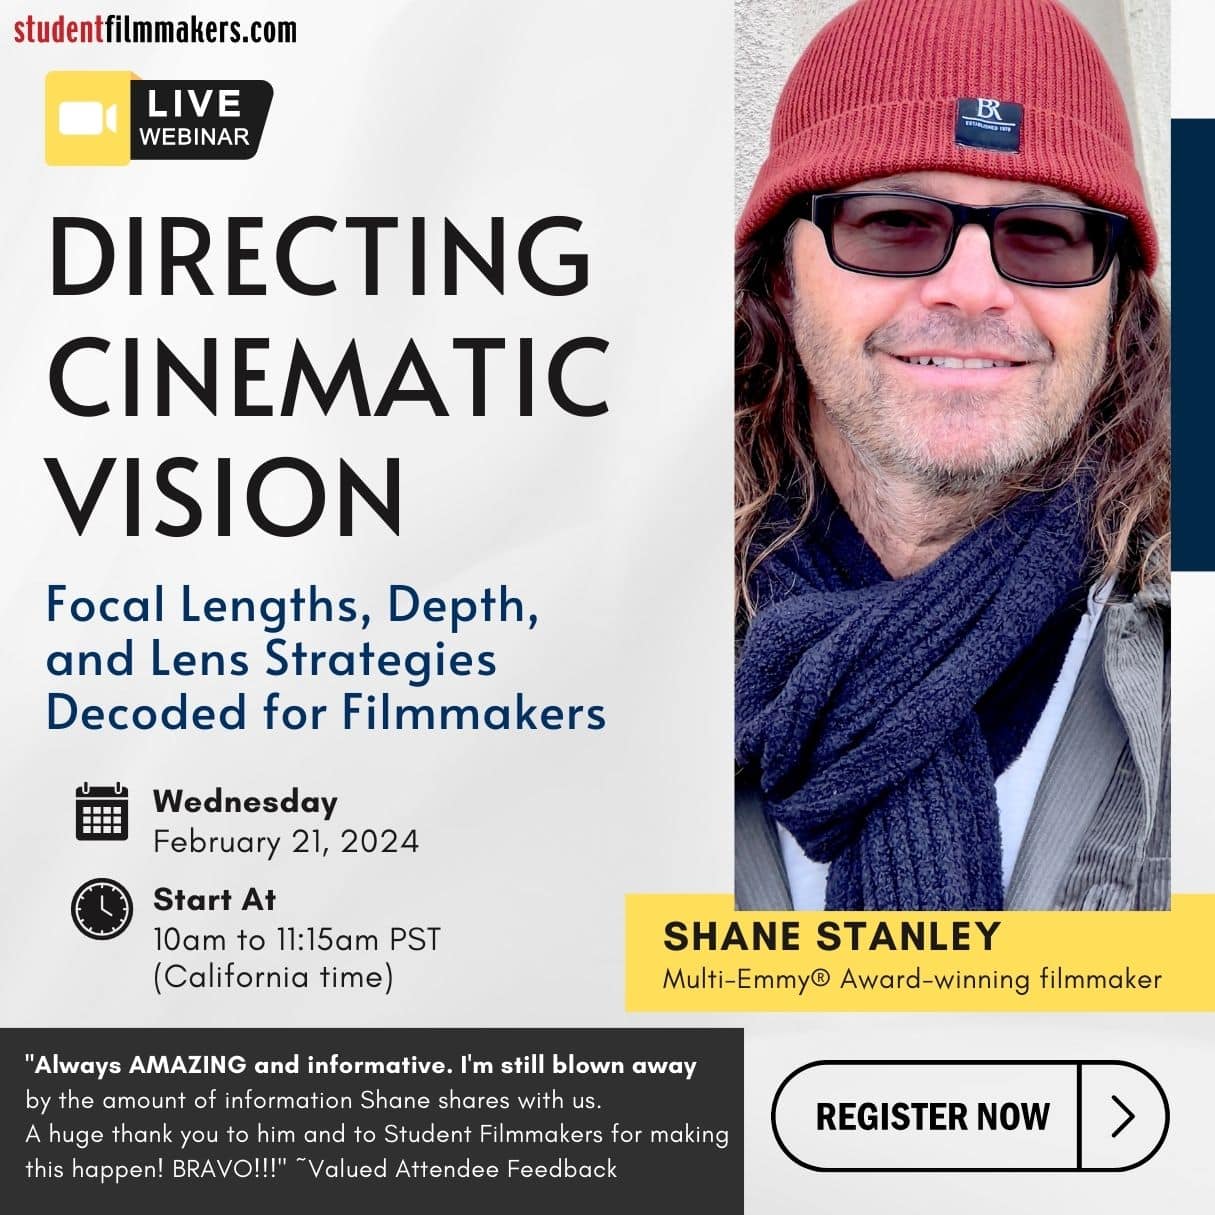 Live Webinar: “Directing Cinematic Vision: Focal Lengths, Depth, and Lens Strategies Decoded for Filmmakers” with Shane Stanley, Multi-Emmy® Award-Winning Filmmaker